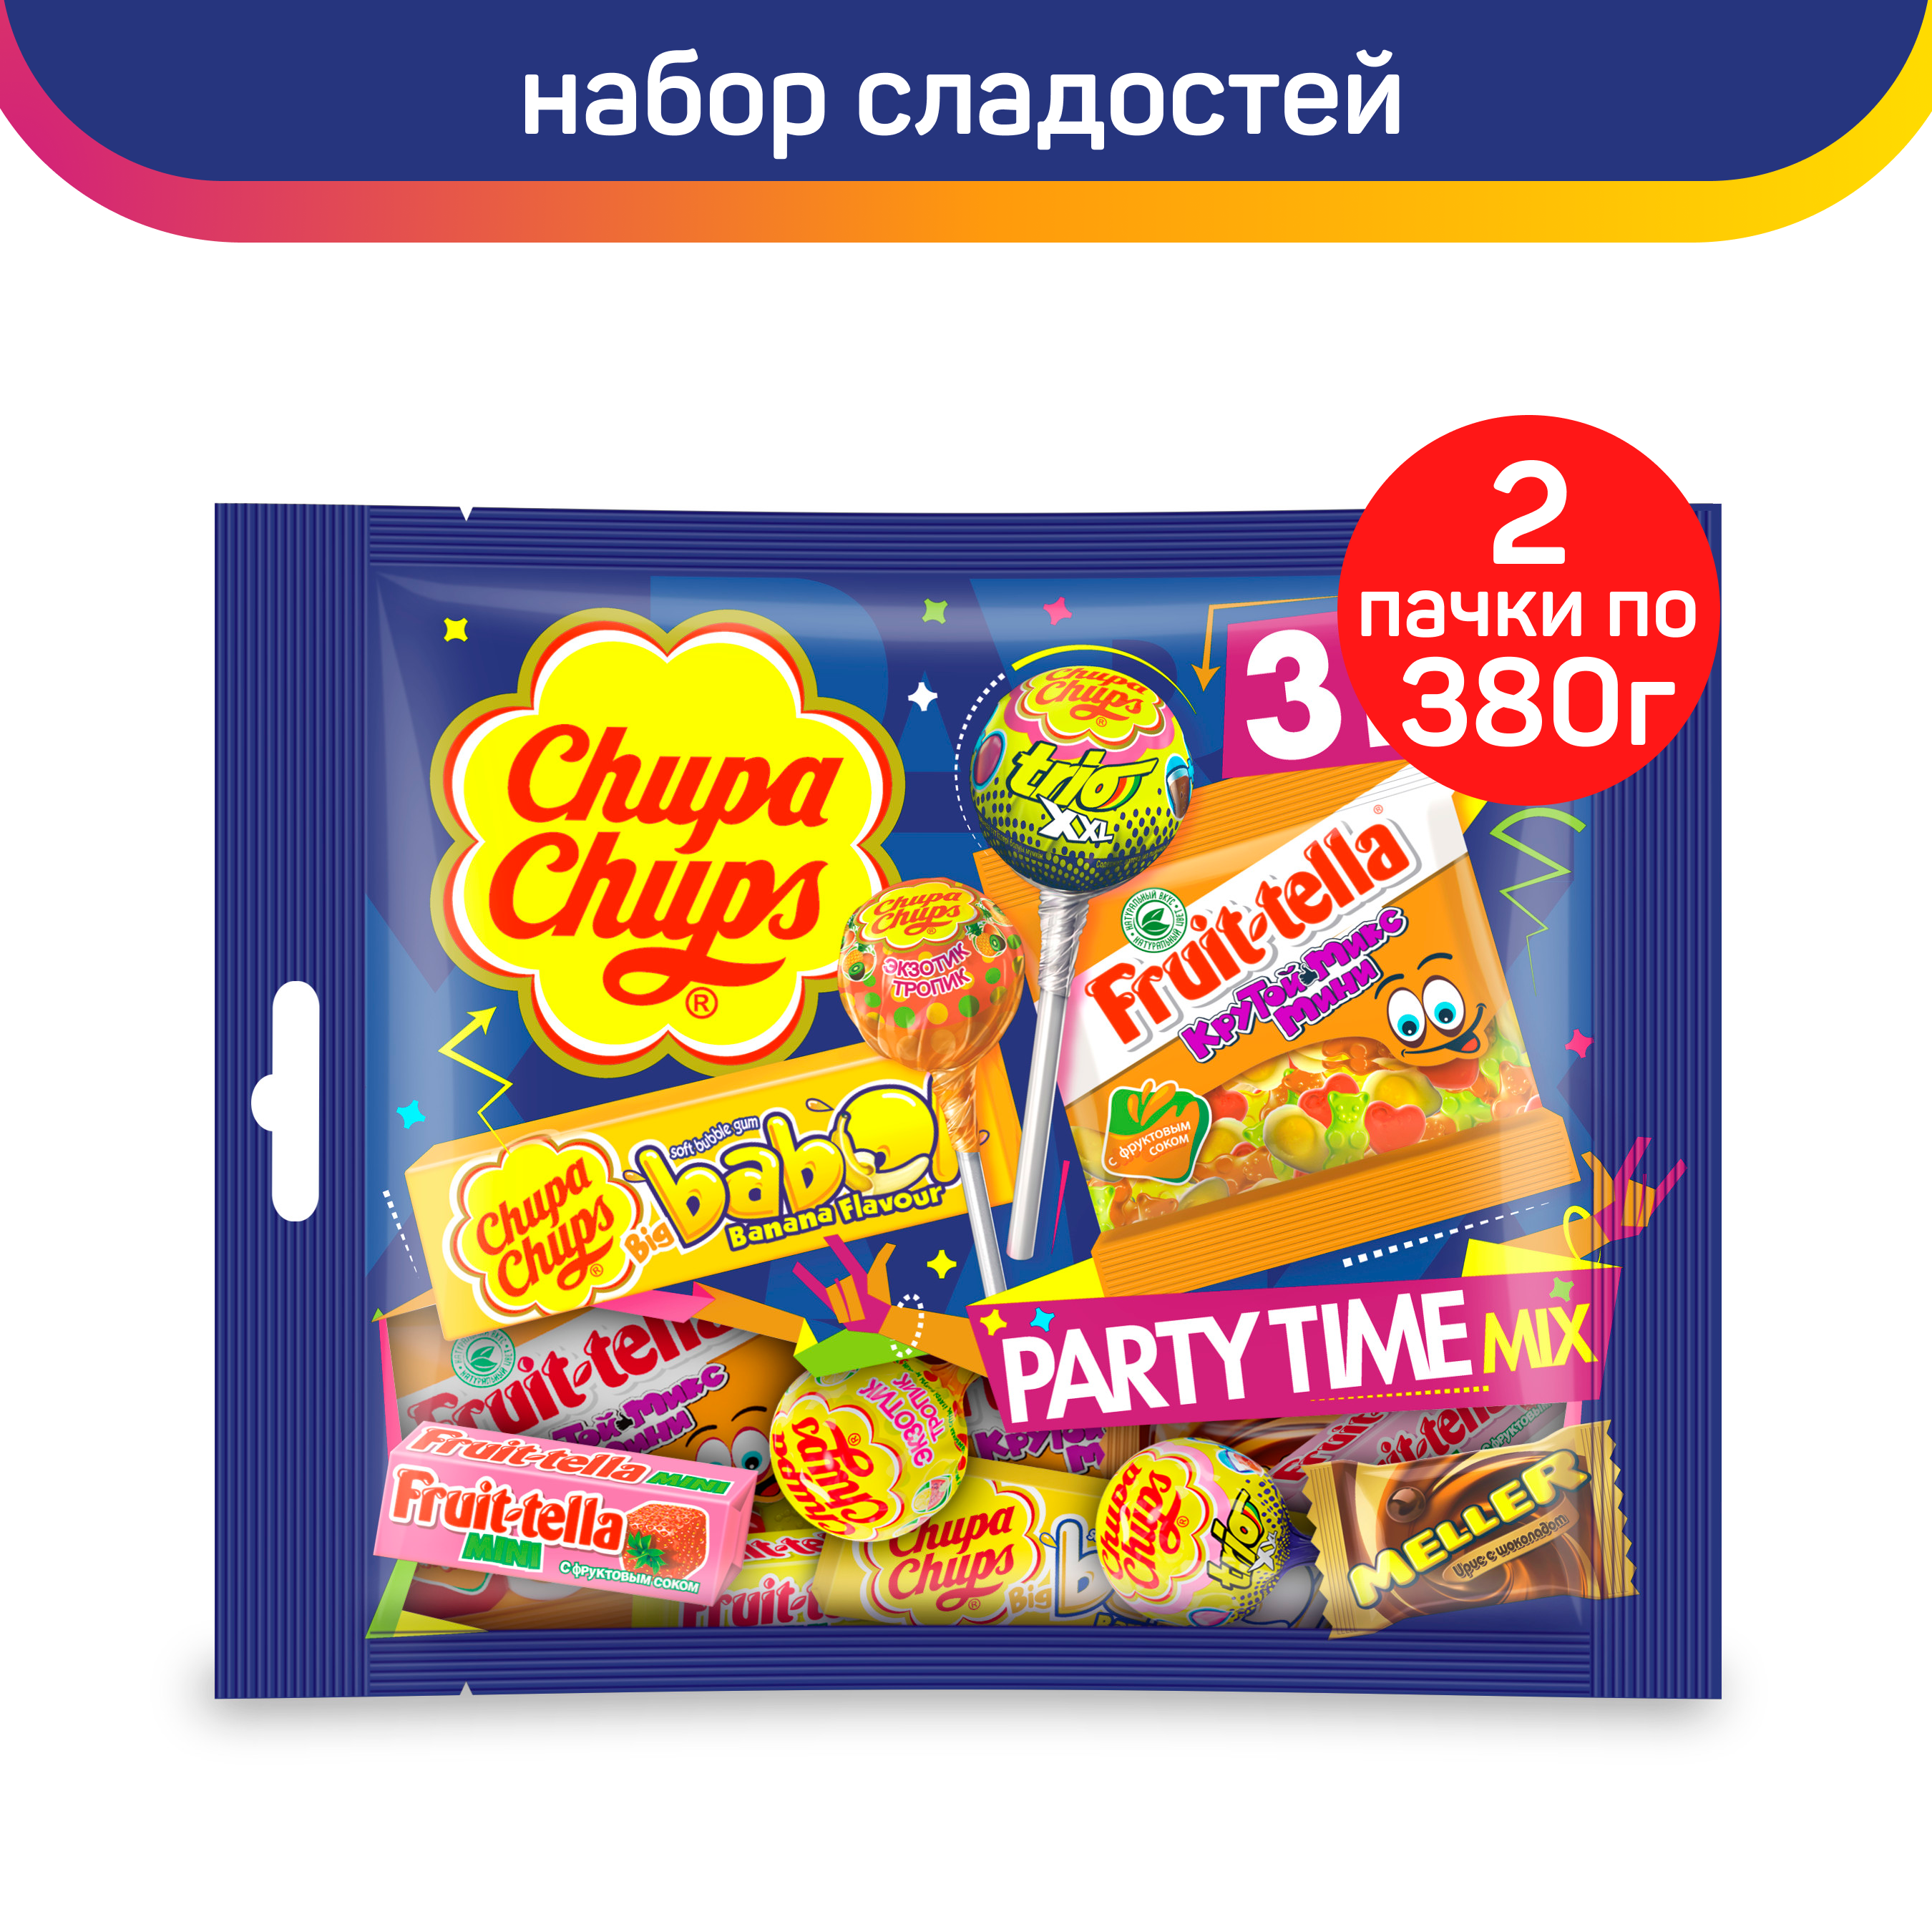 Набор сладостей Chupa Chups Party Time Mix, 2 шт по 380 г